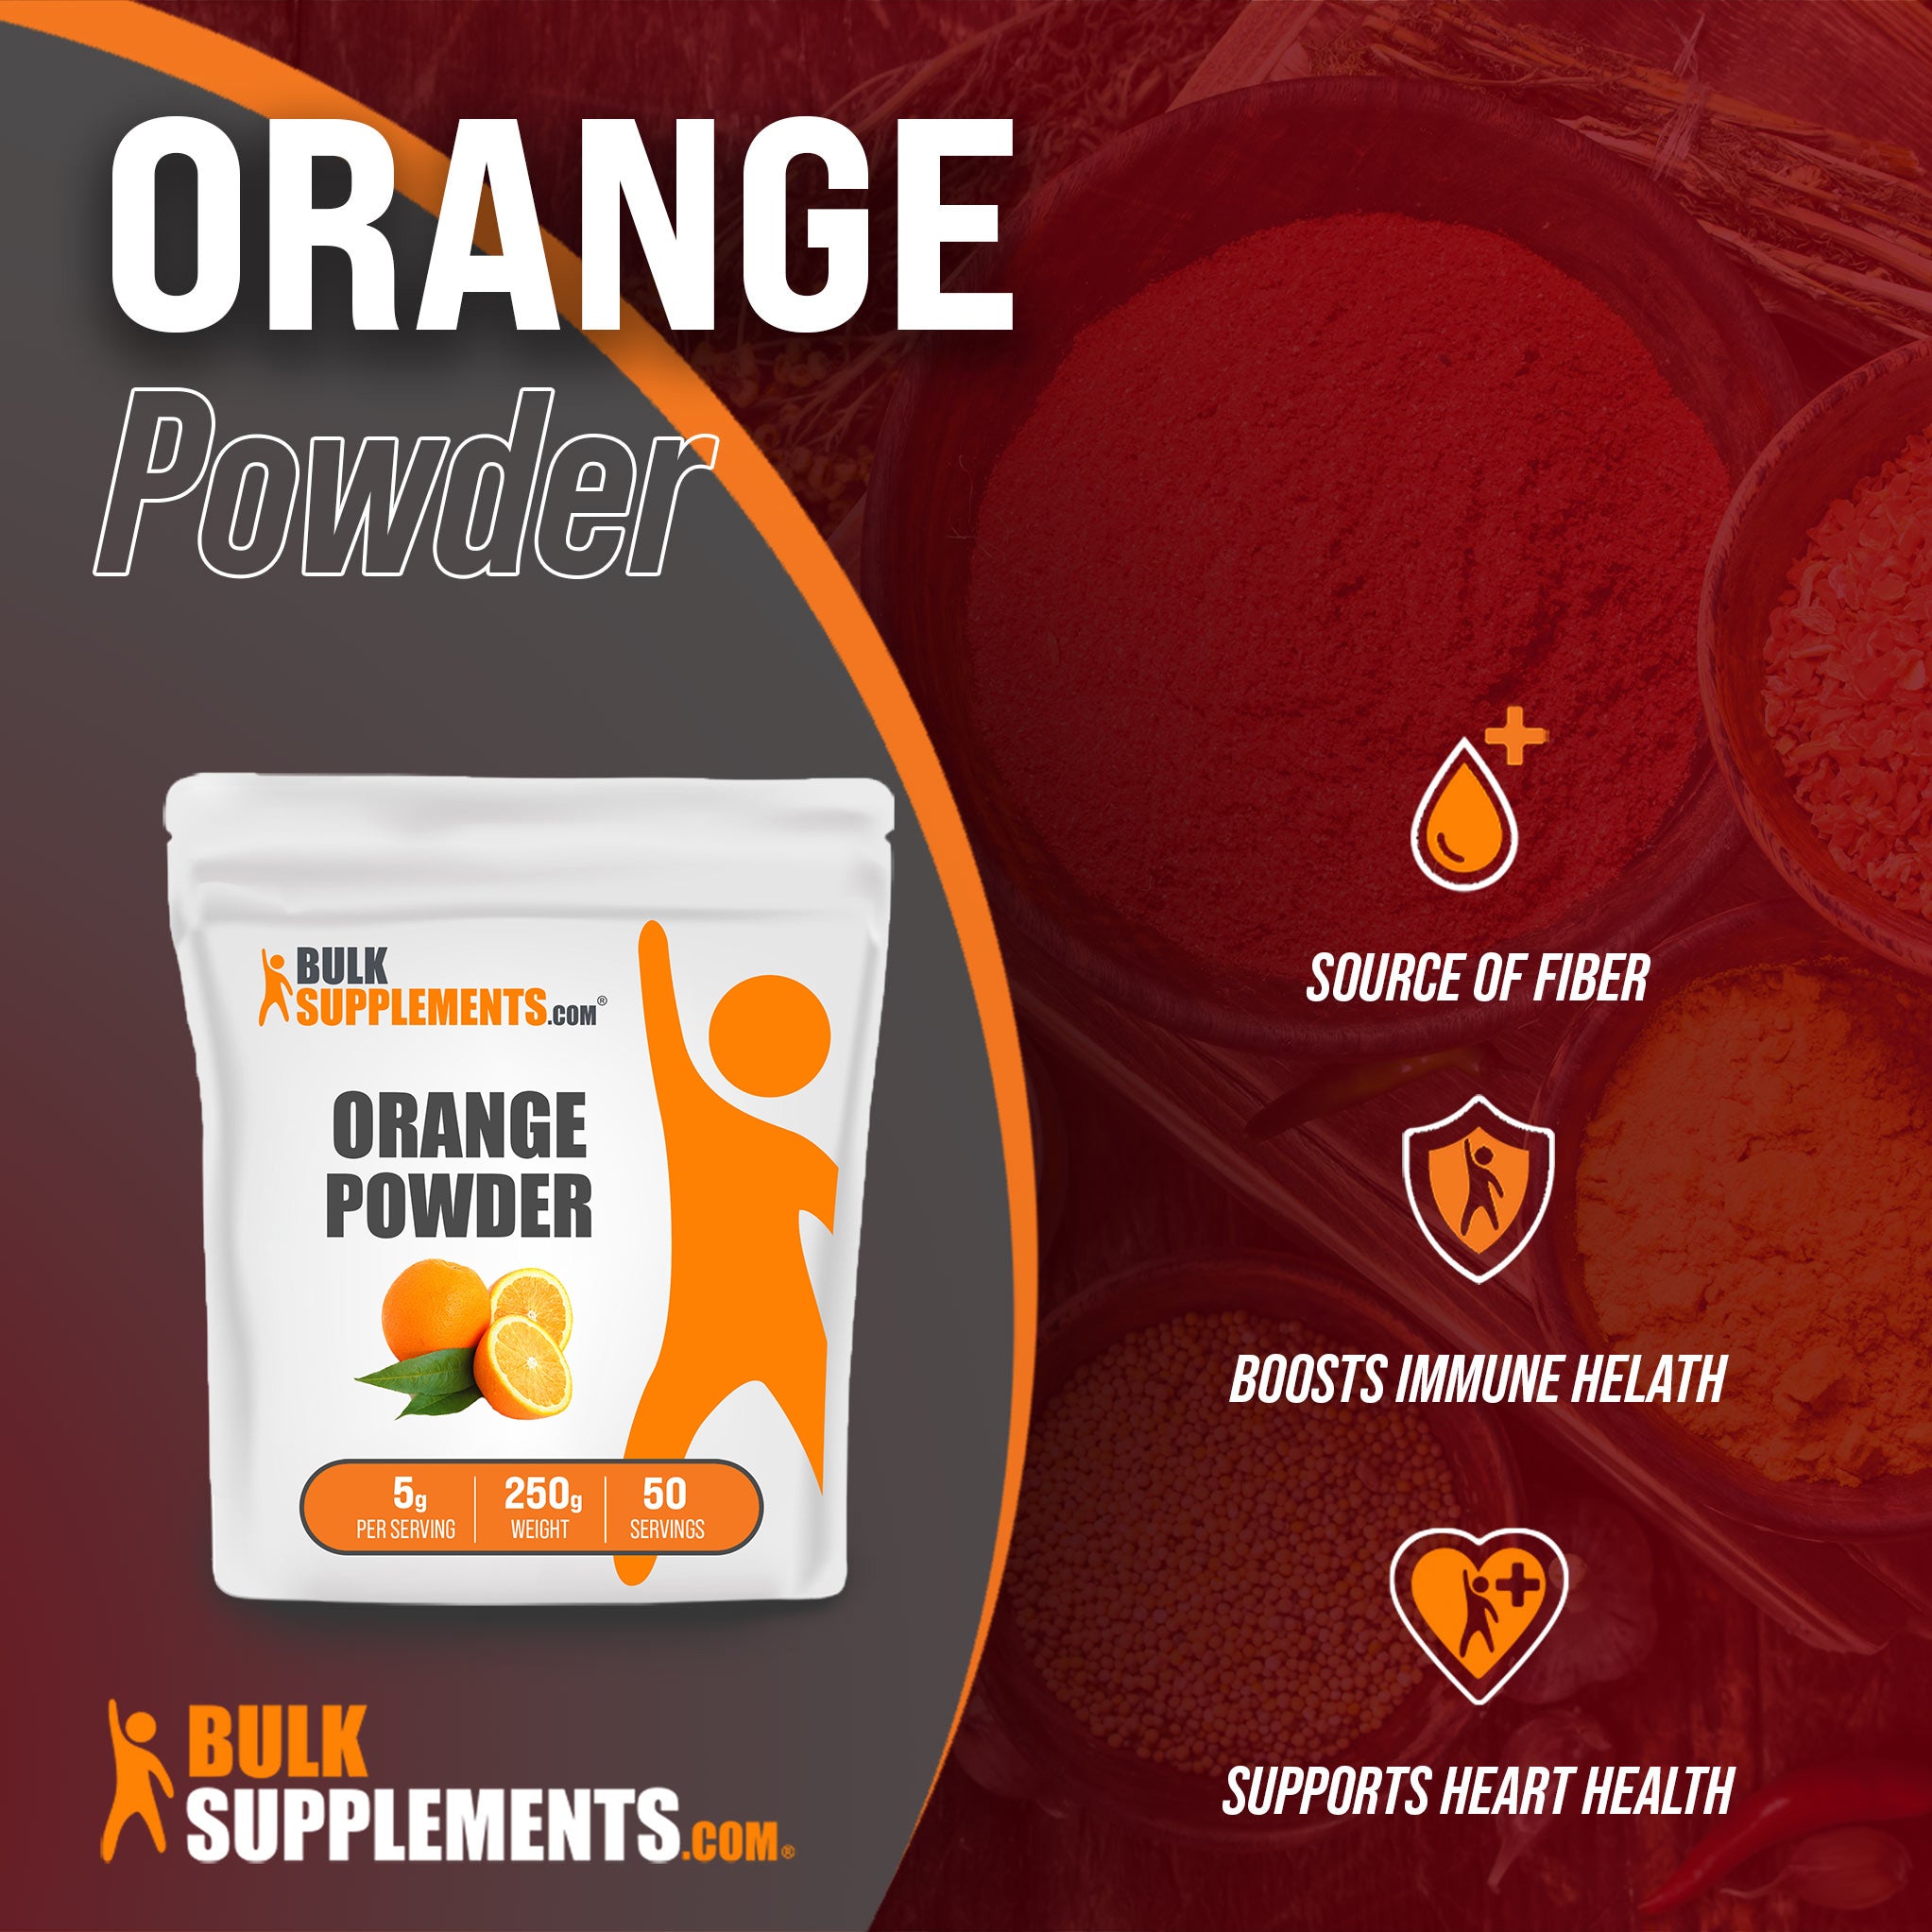 Benefits of Orange Powder: source of fiber, boosts immune health, supports heart health